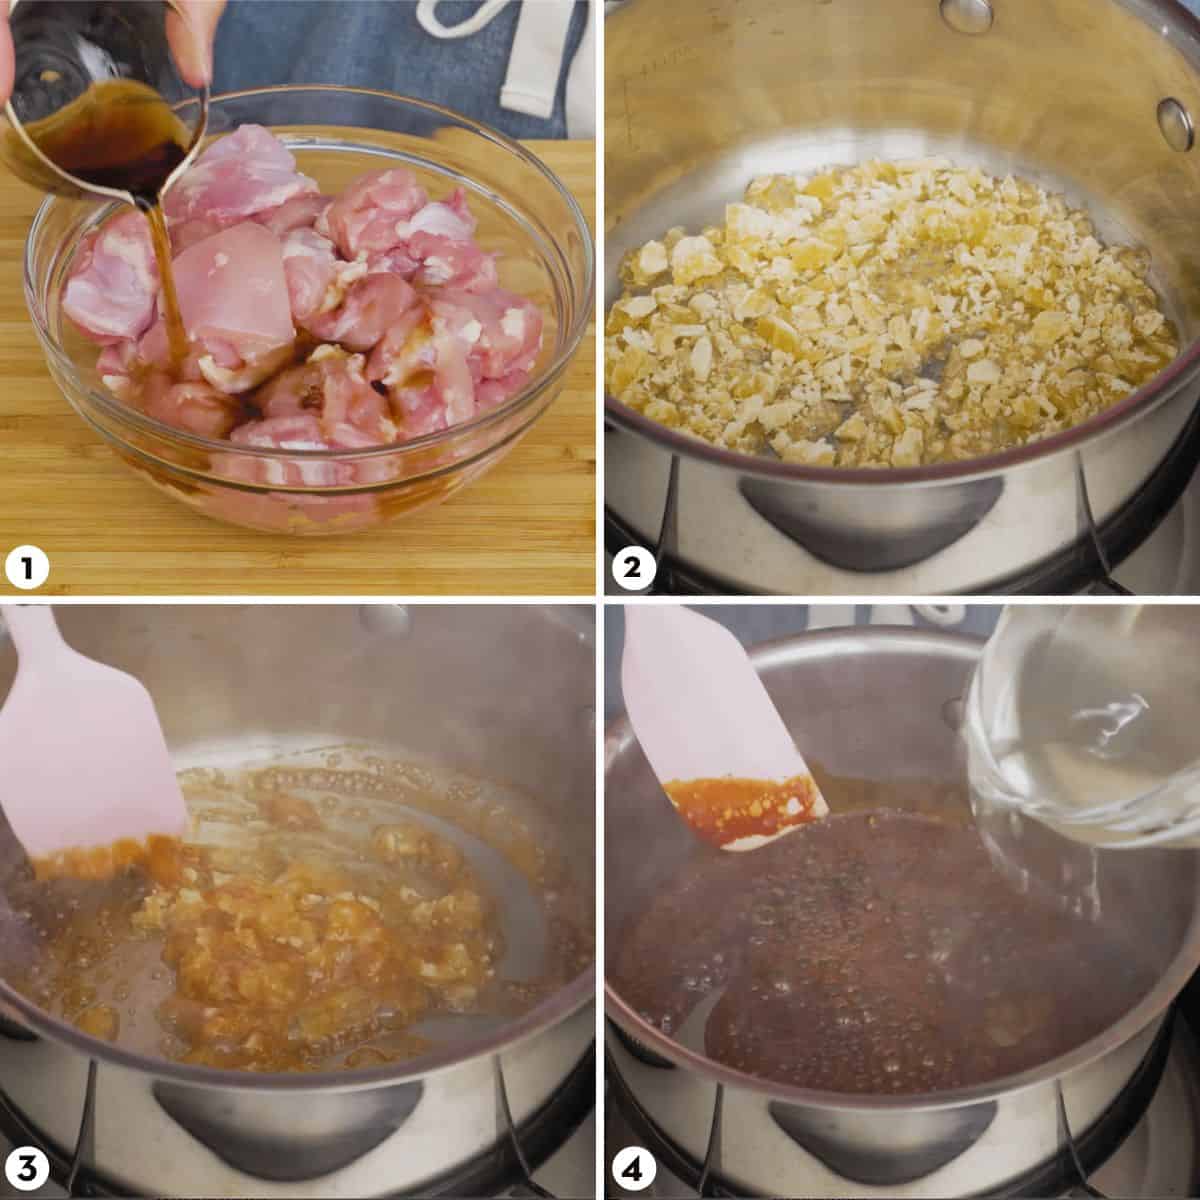 Process shots for making caramel chicken steps 1-4